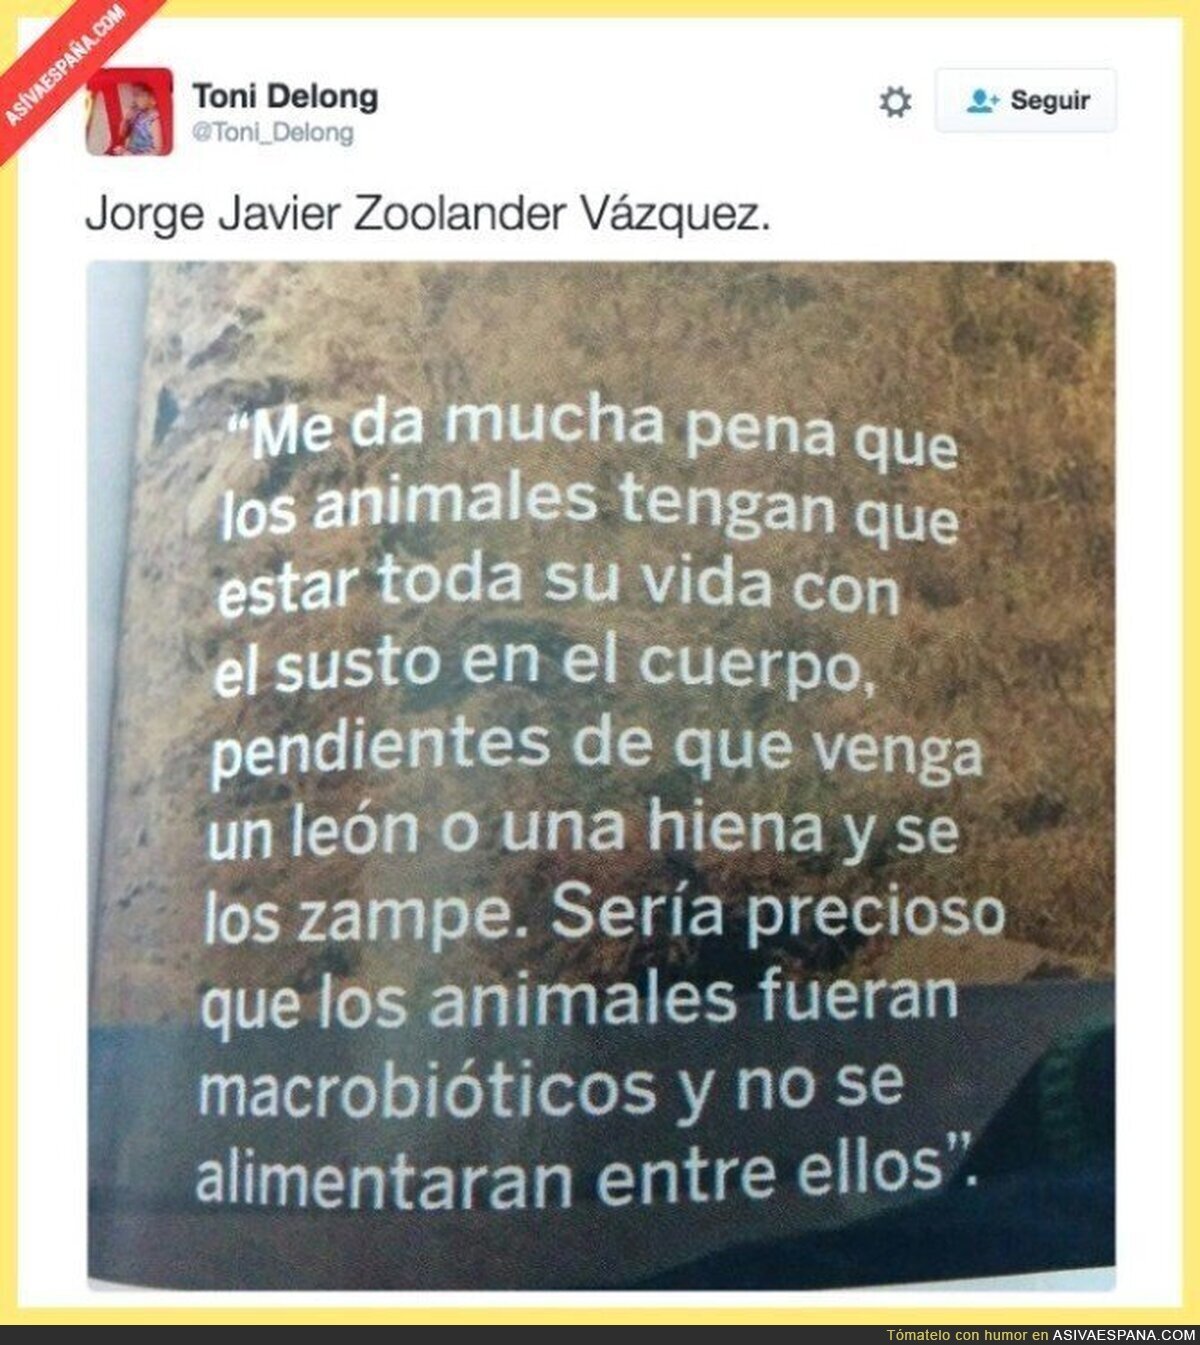 Jorge Javier Vázquez y los animales